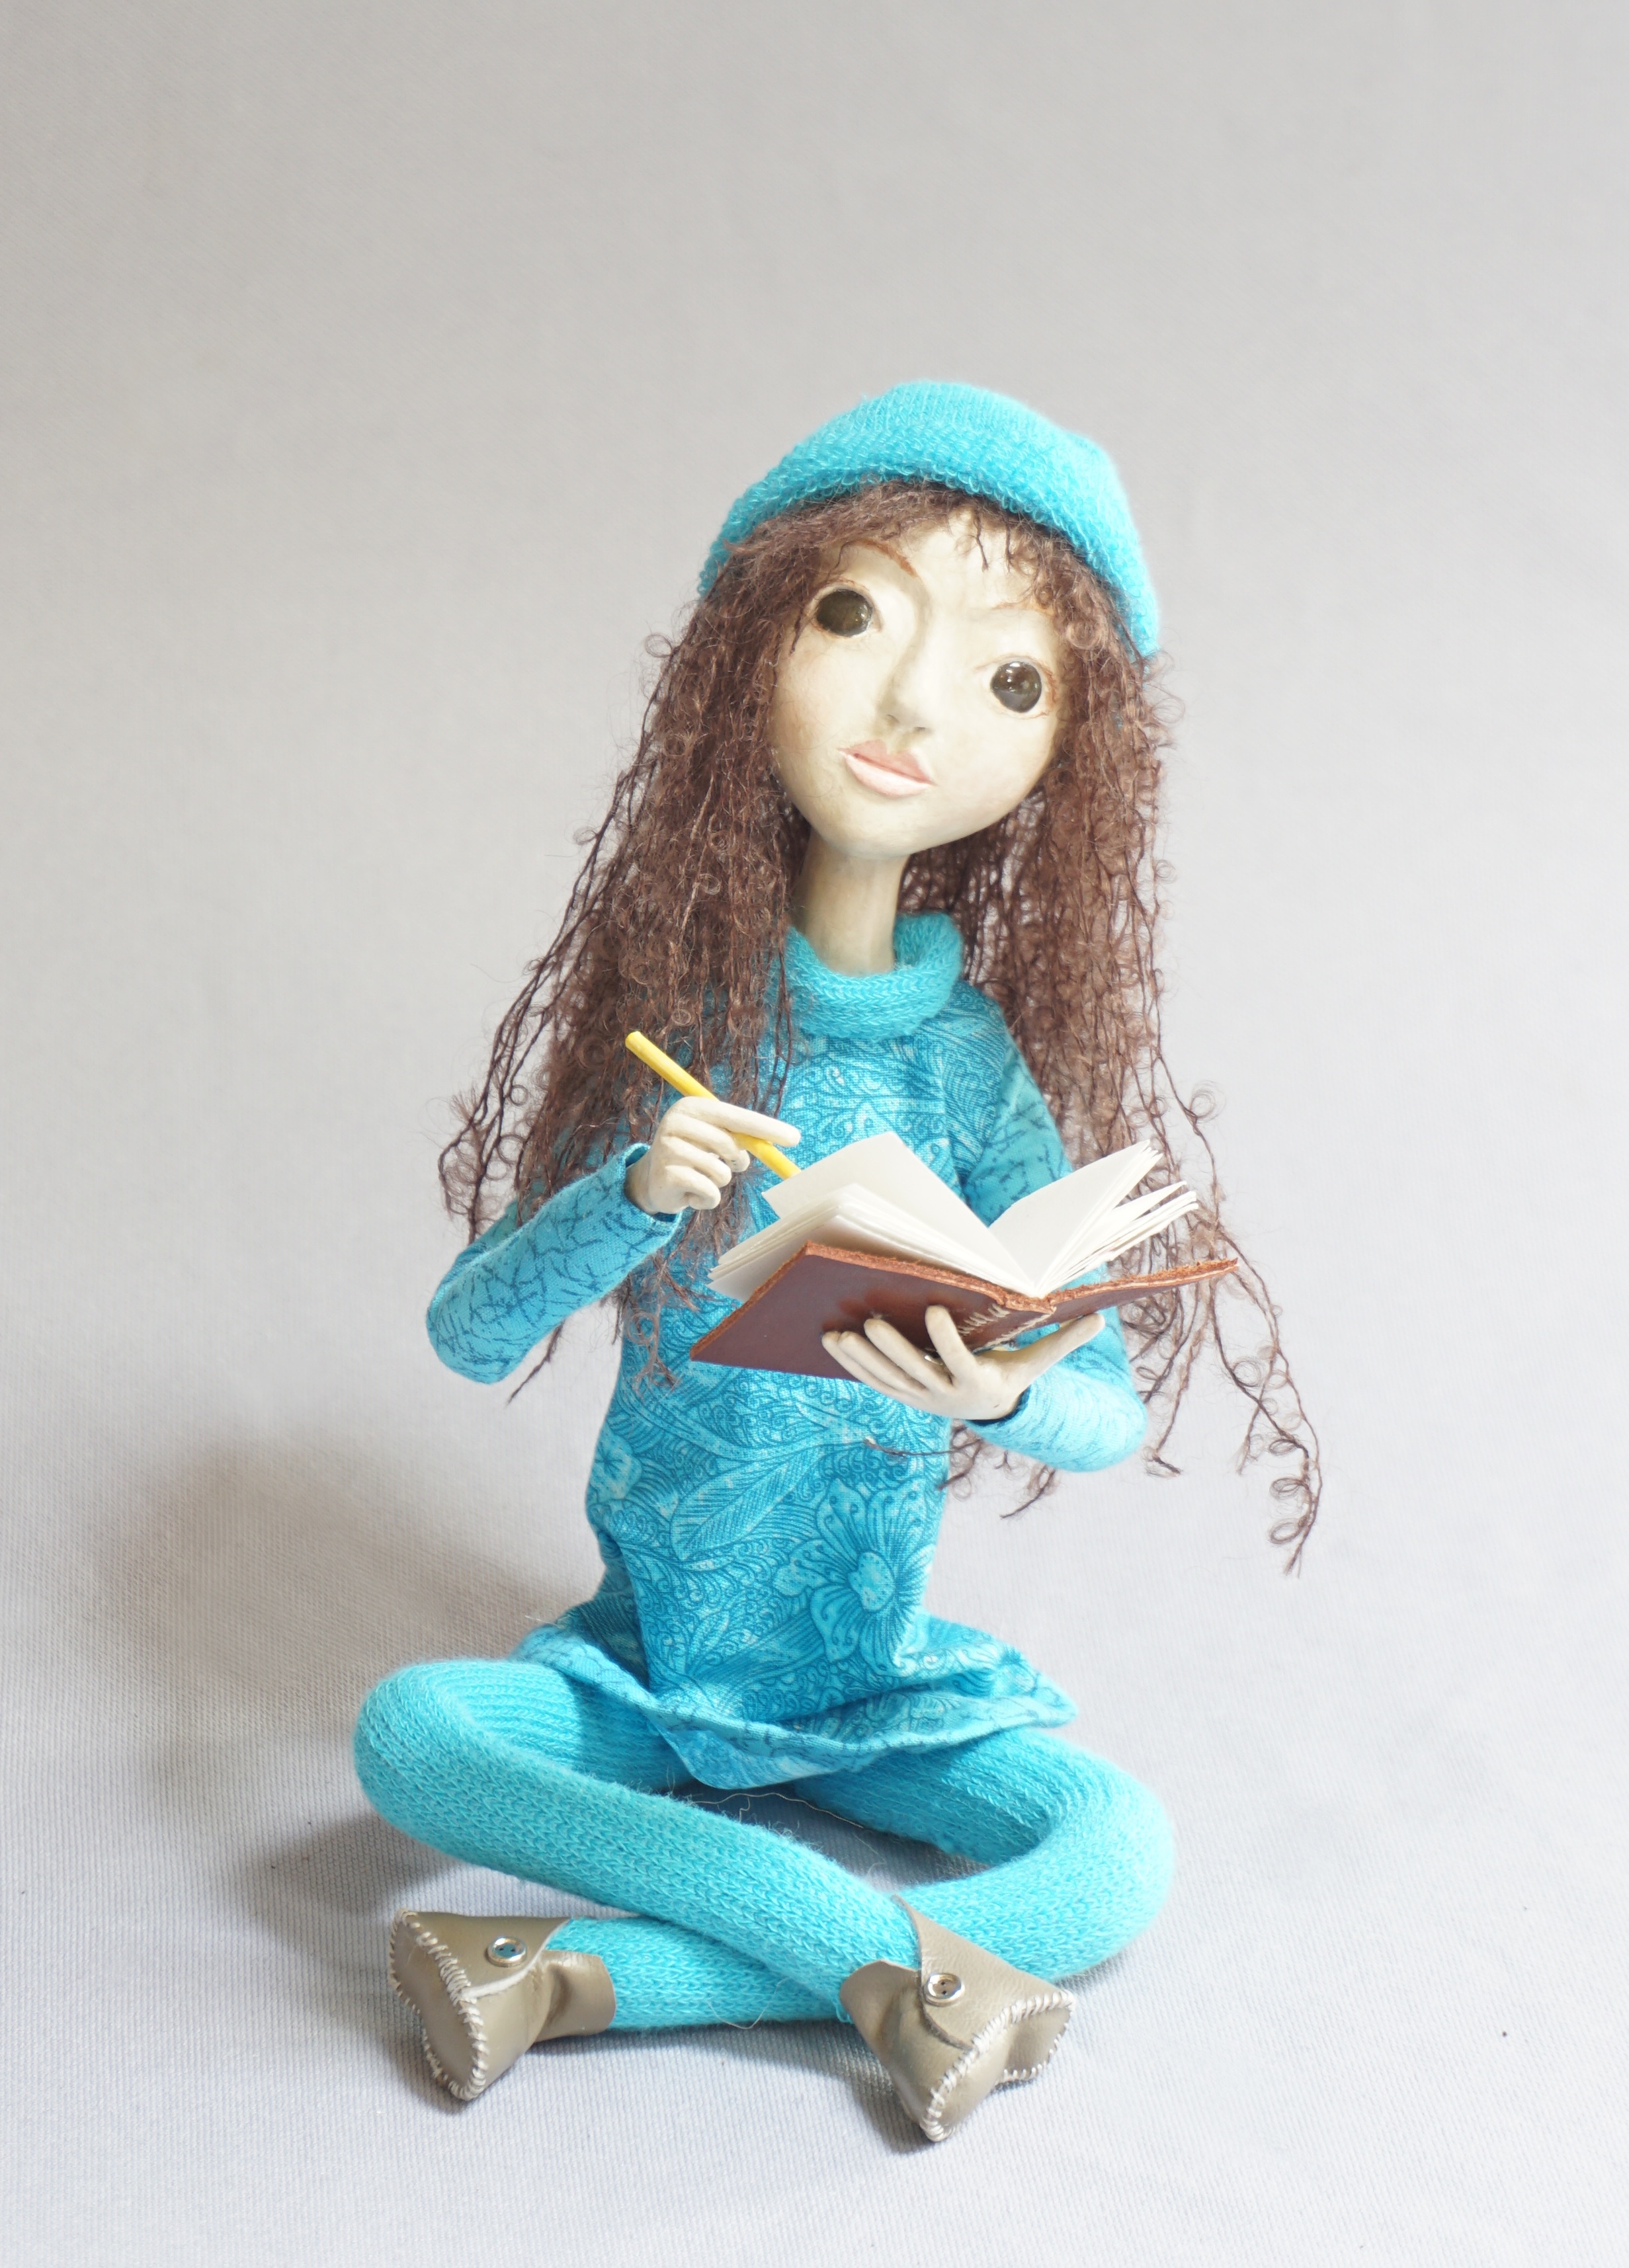 Sketch - seated art doll figure sculpture